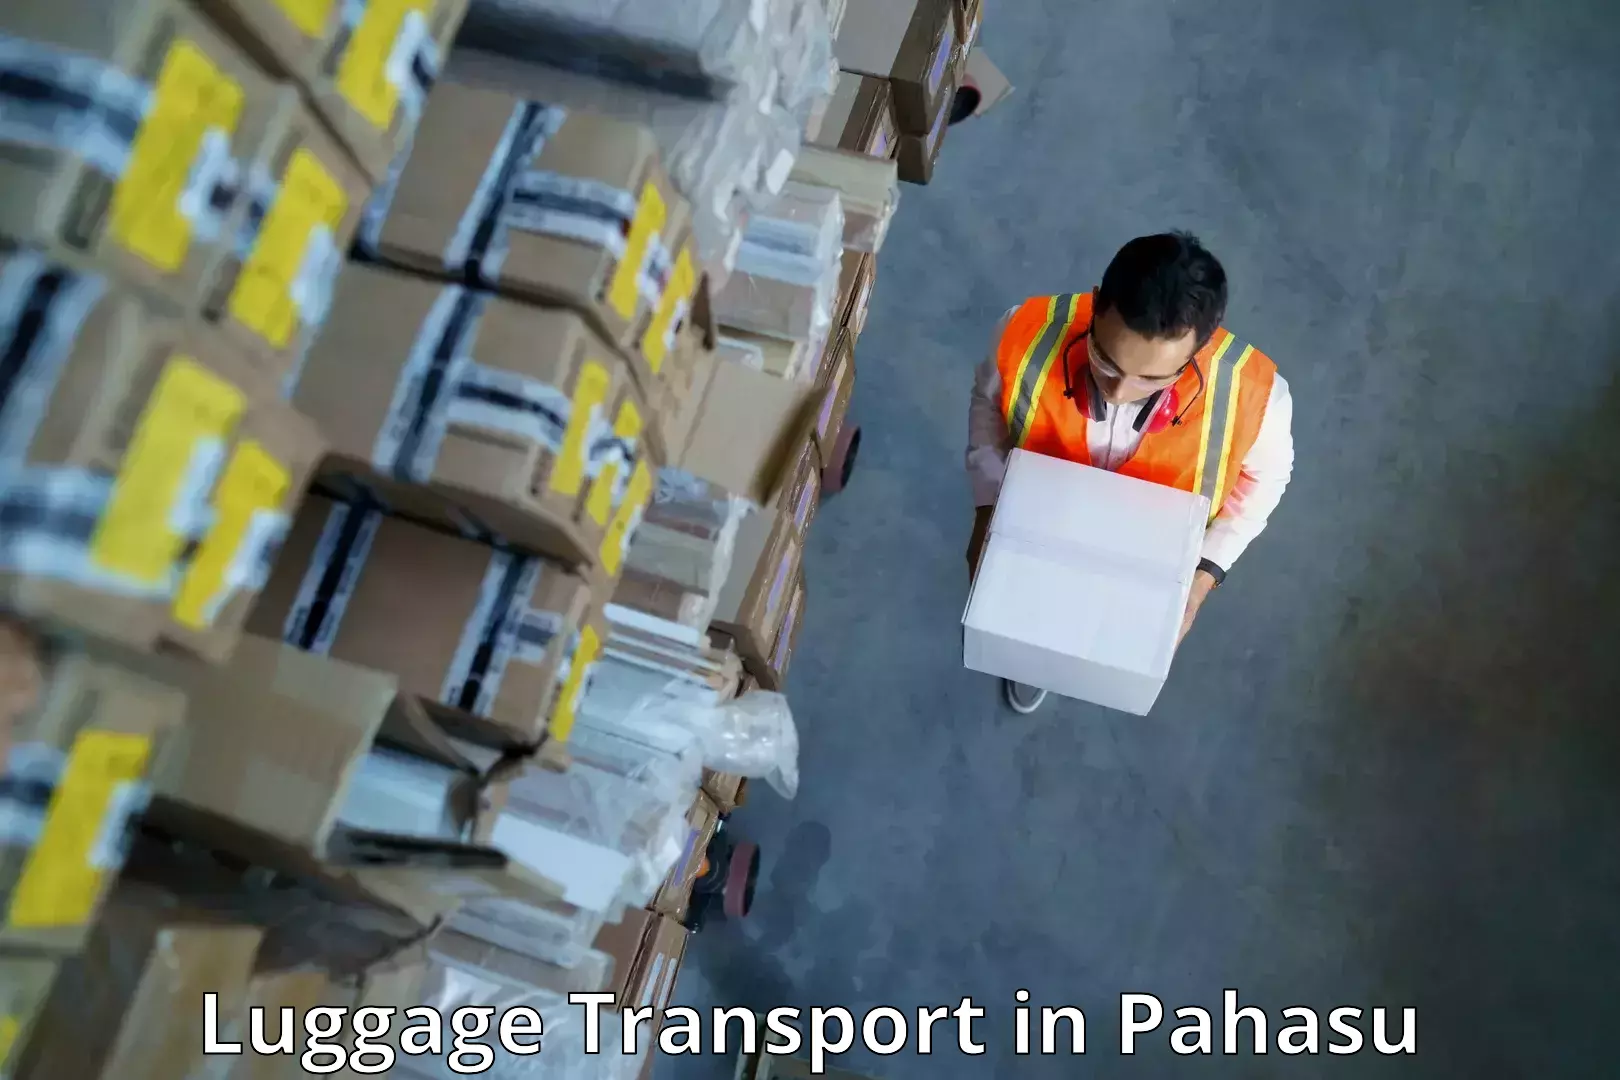 Corporate baggage transport in Pahasu